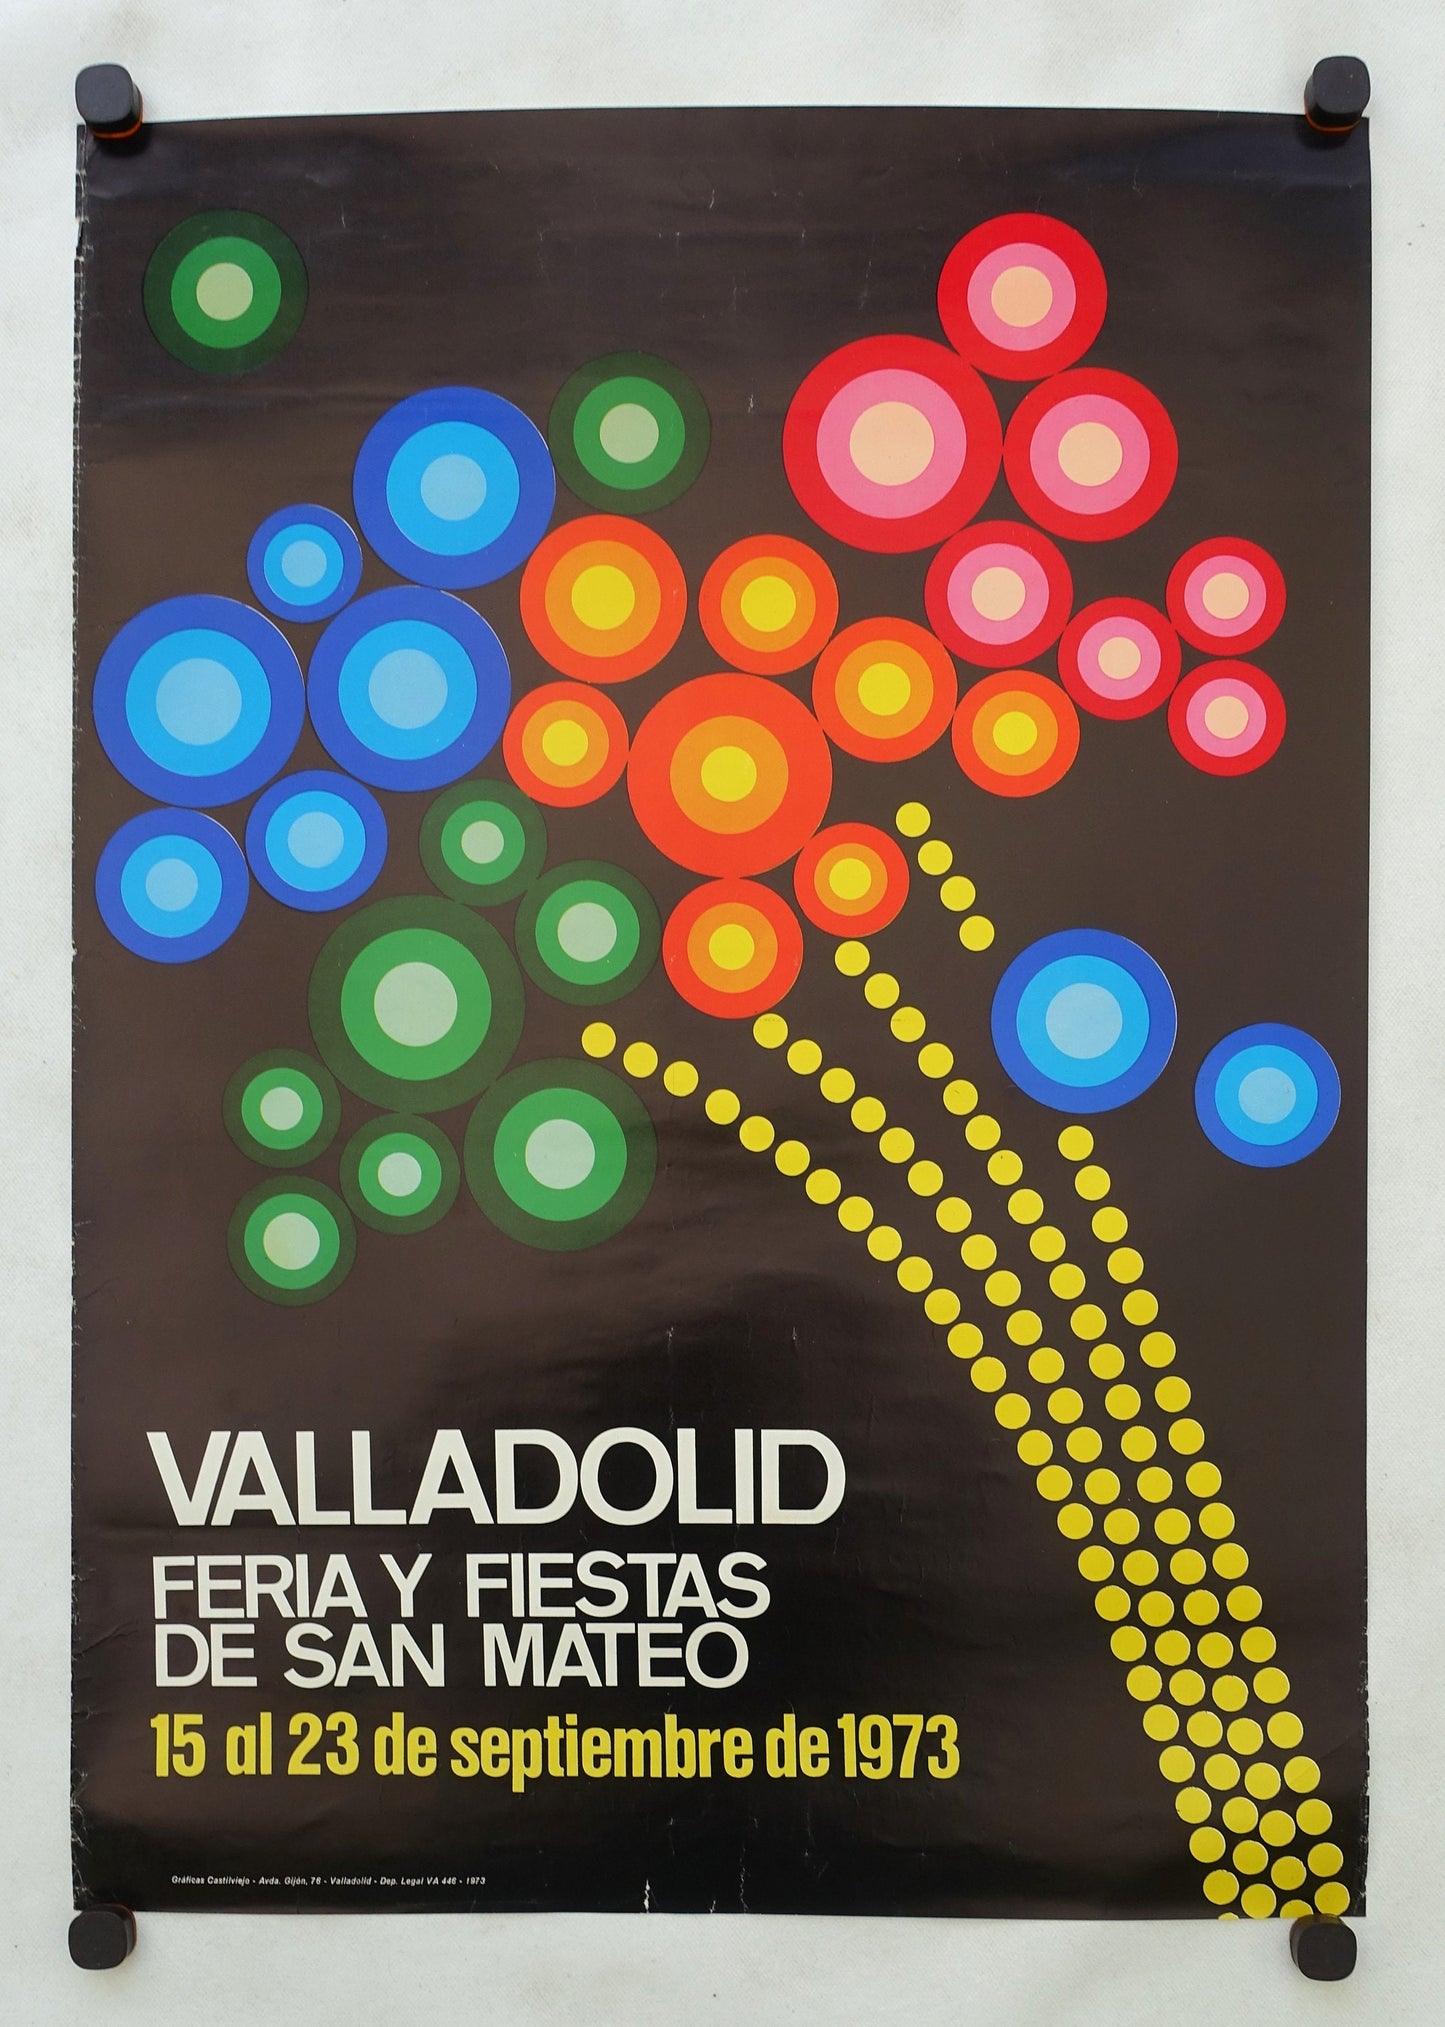 1973 Spanish Festival Poster Valladolid - Original Vintage Poster